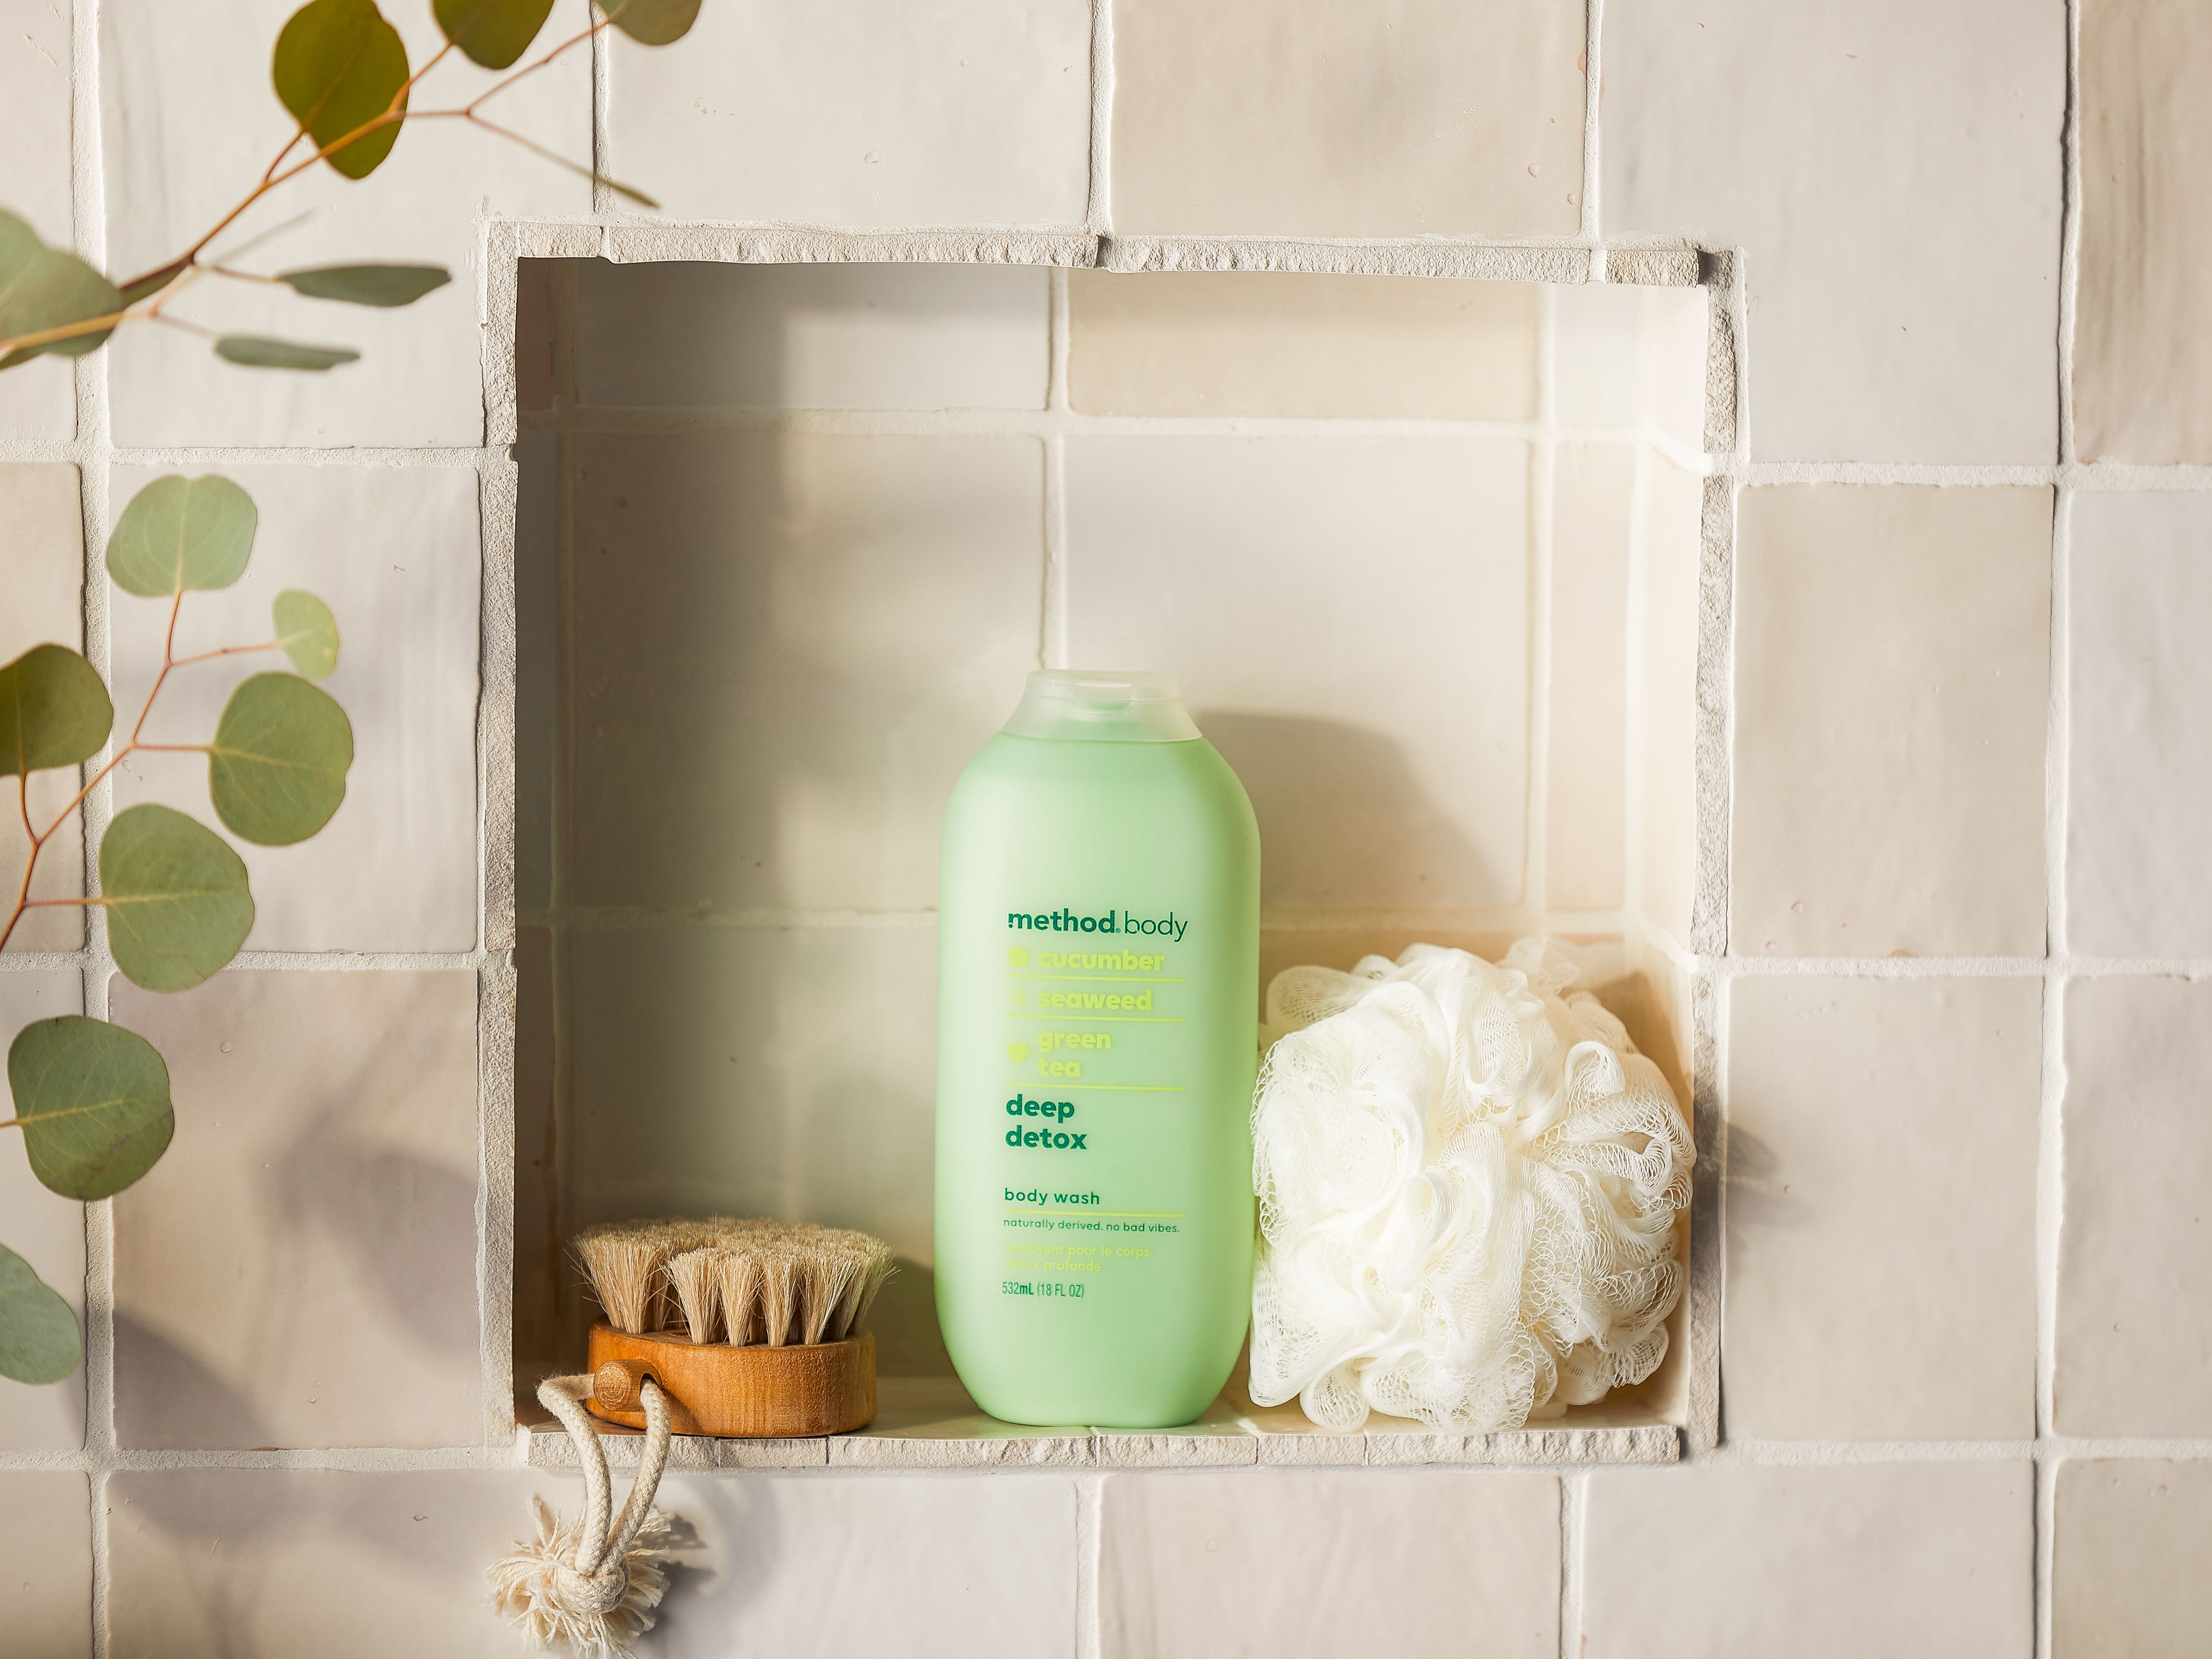 Image of Method green tea bodywash on shower shelf with loofah and brush